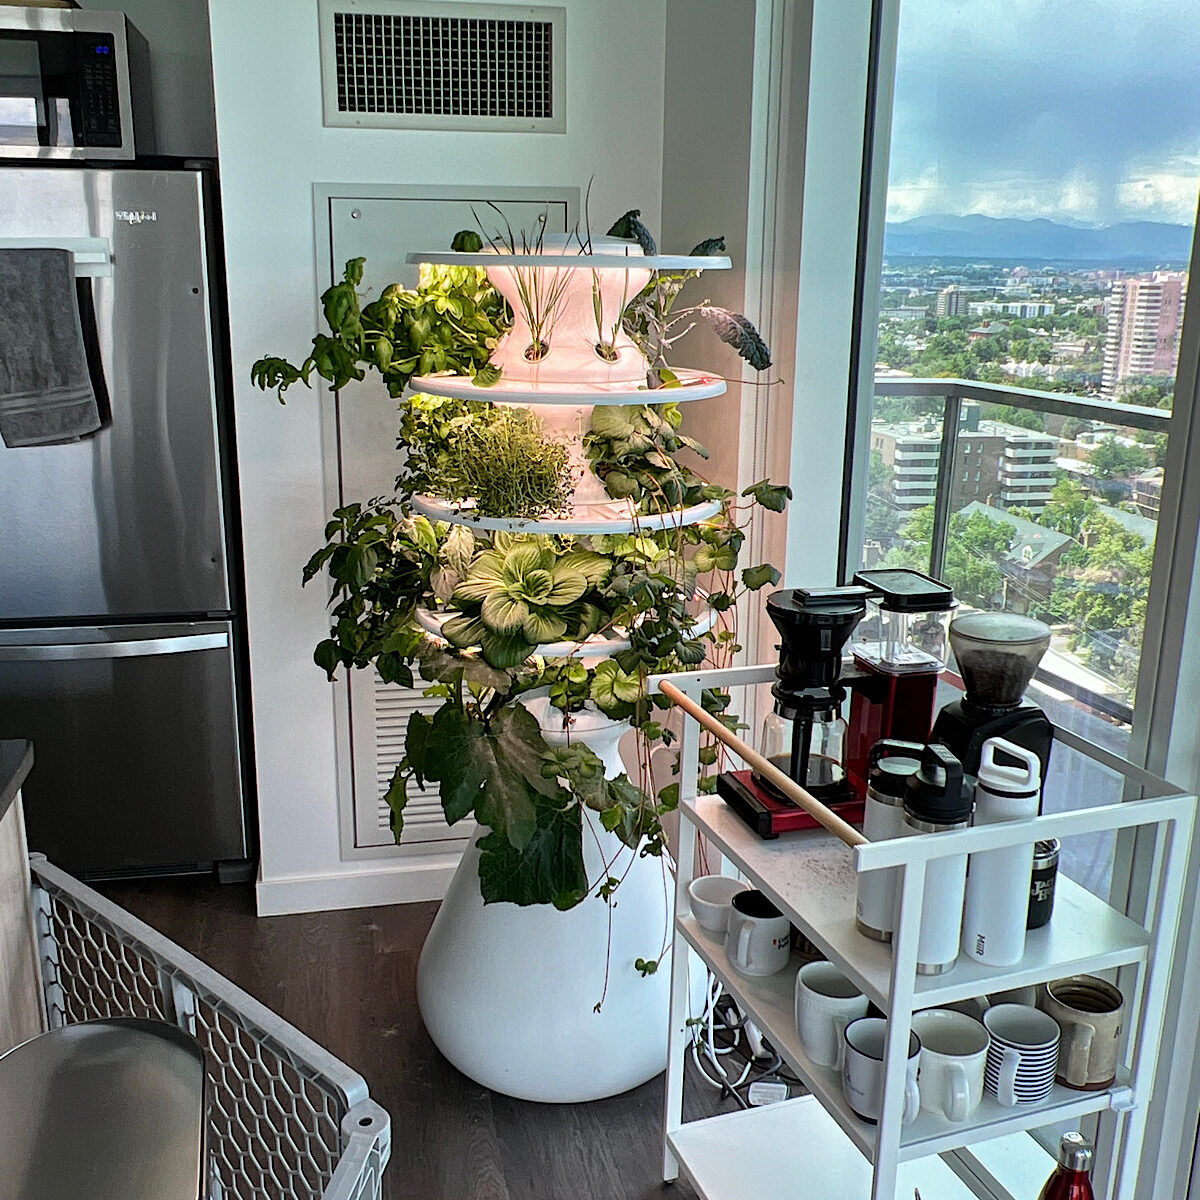 Indoor hydroponic gardening system